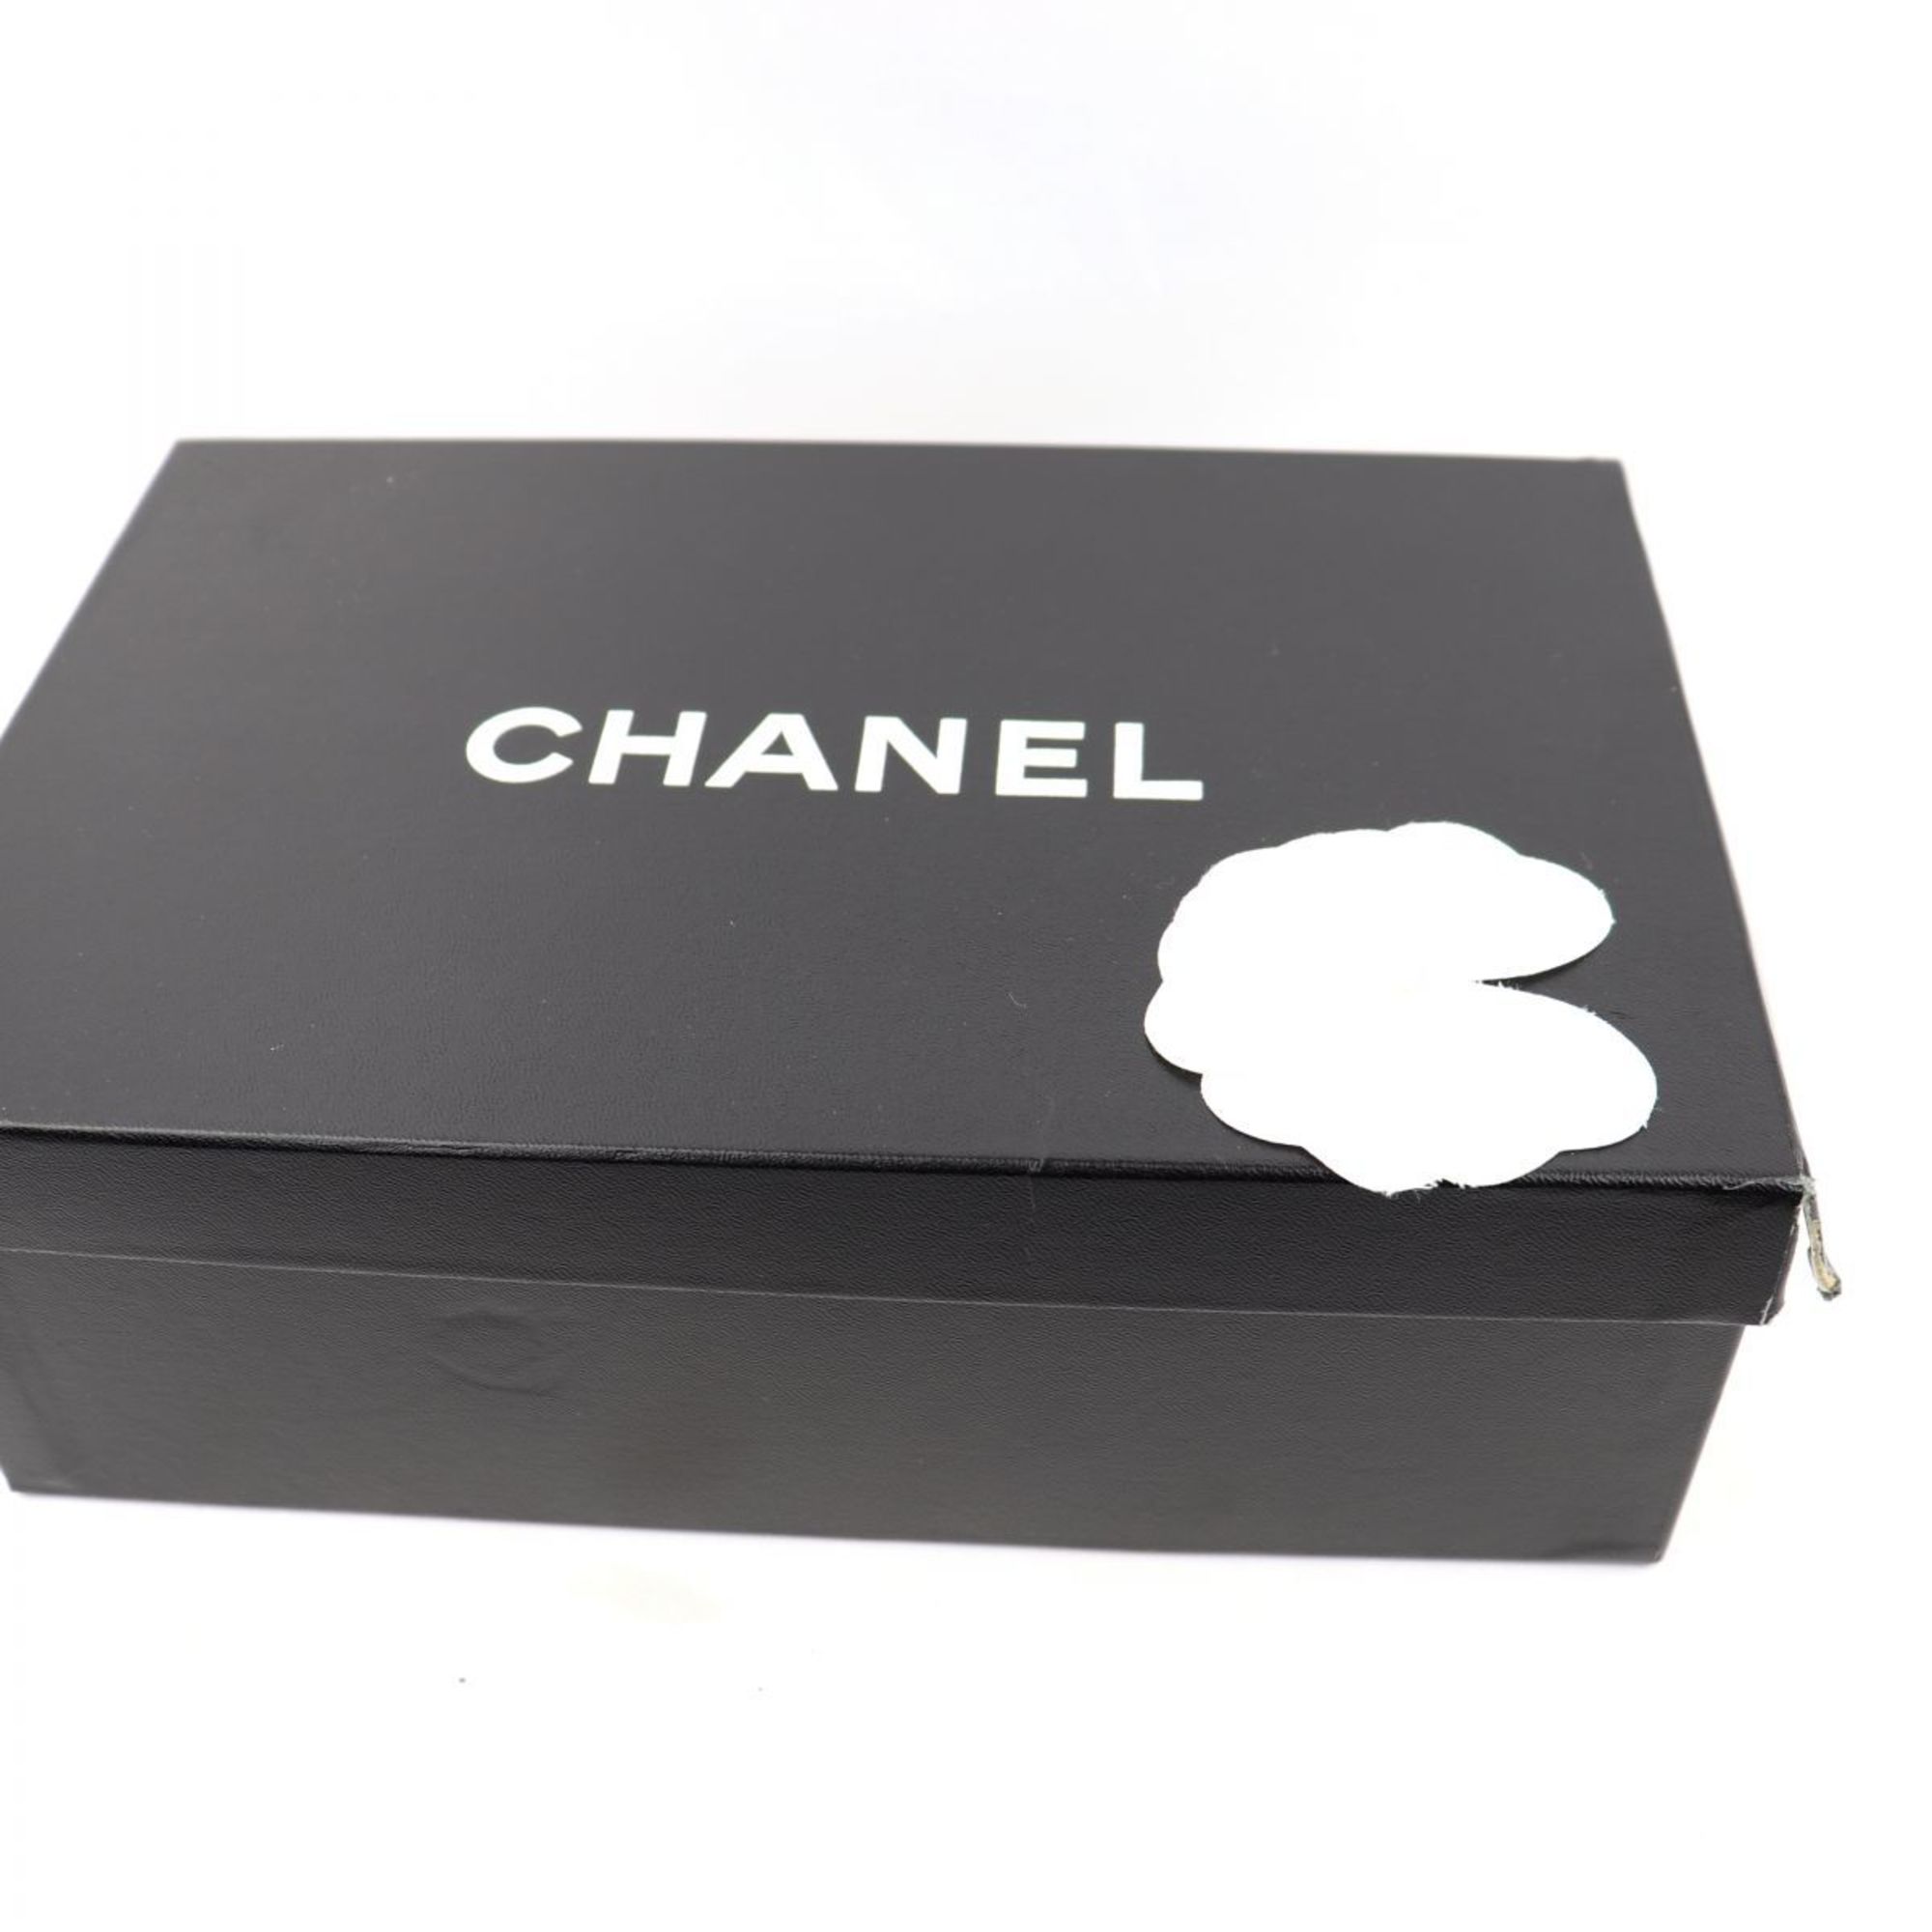 Chanel Leather Heel Pumps Beige x Black 35 Coco Mark Stitch Bicolor Ribbon Women's Shoes